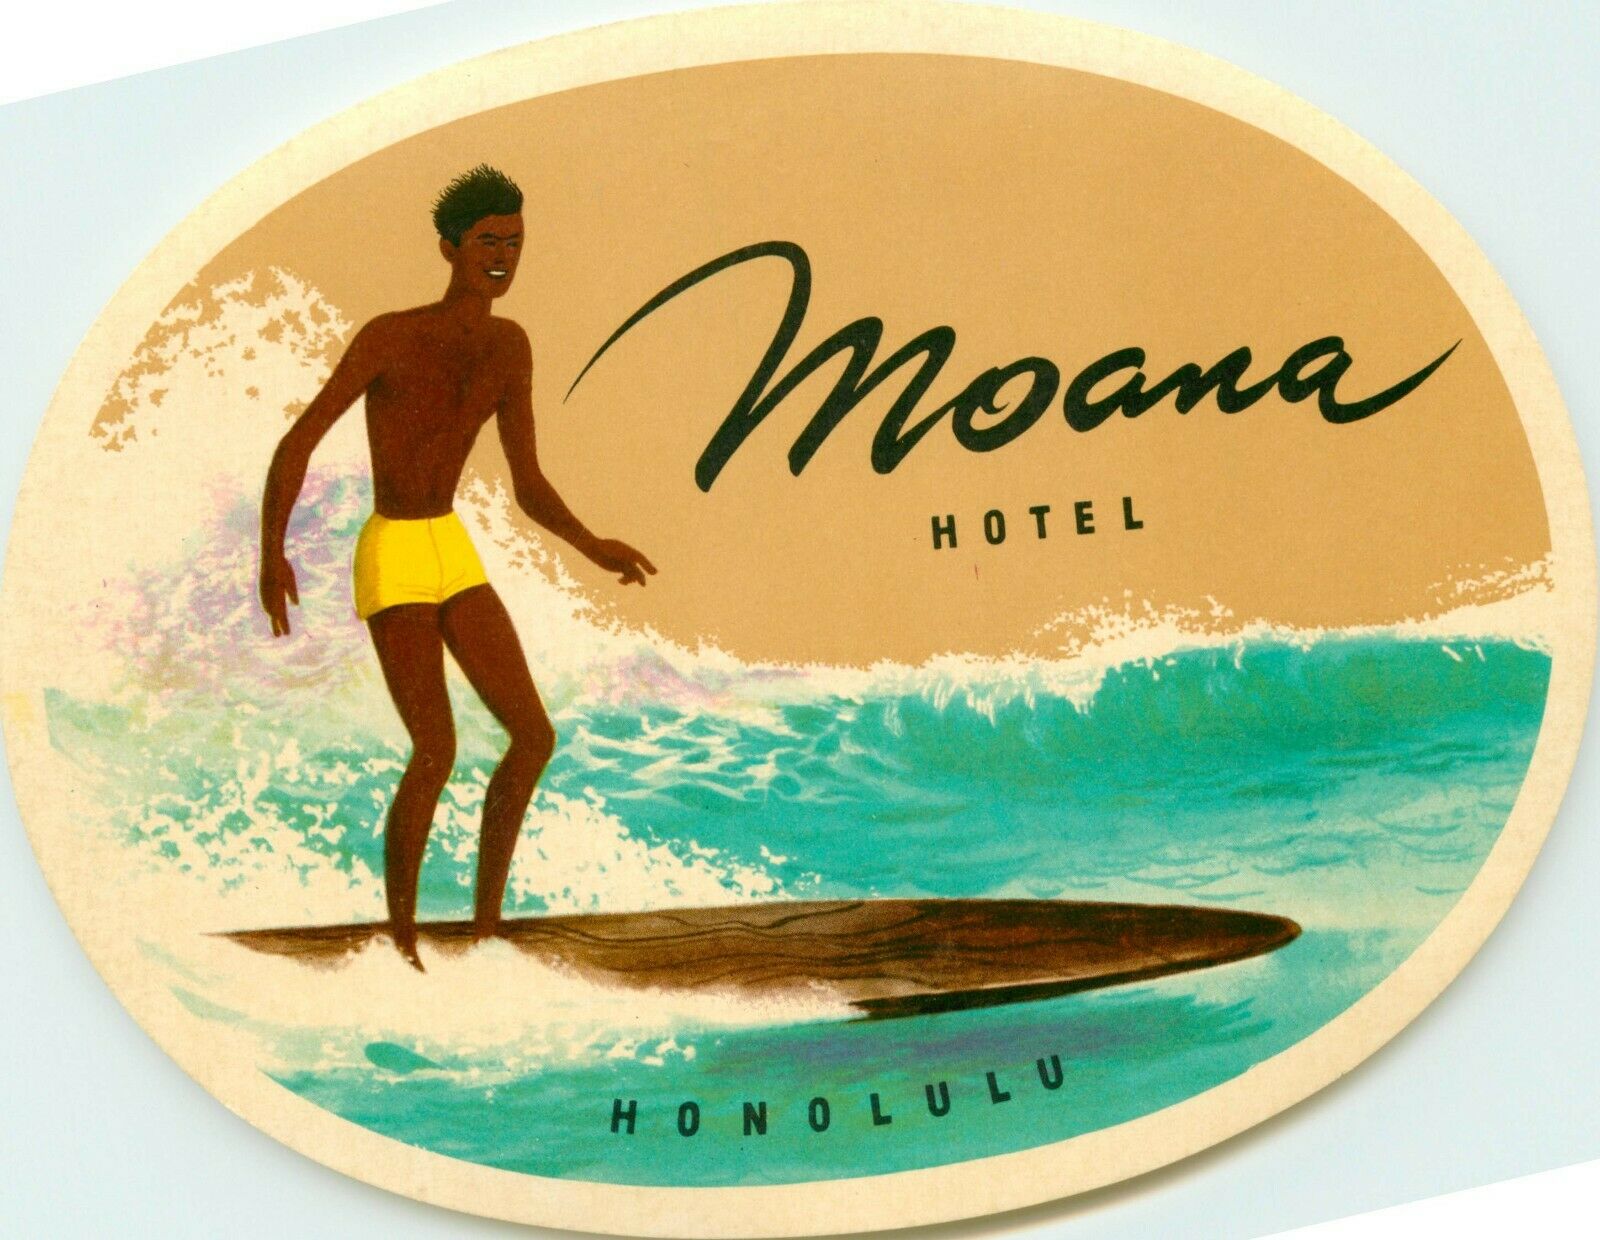 Moana Hotel ~honolulu - Hawaii~ Vibrant Surf / Surfing Luggage Label, 1950  Mint